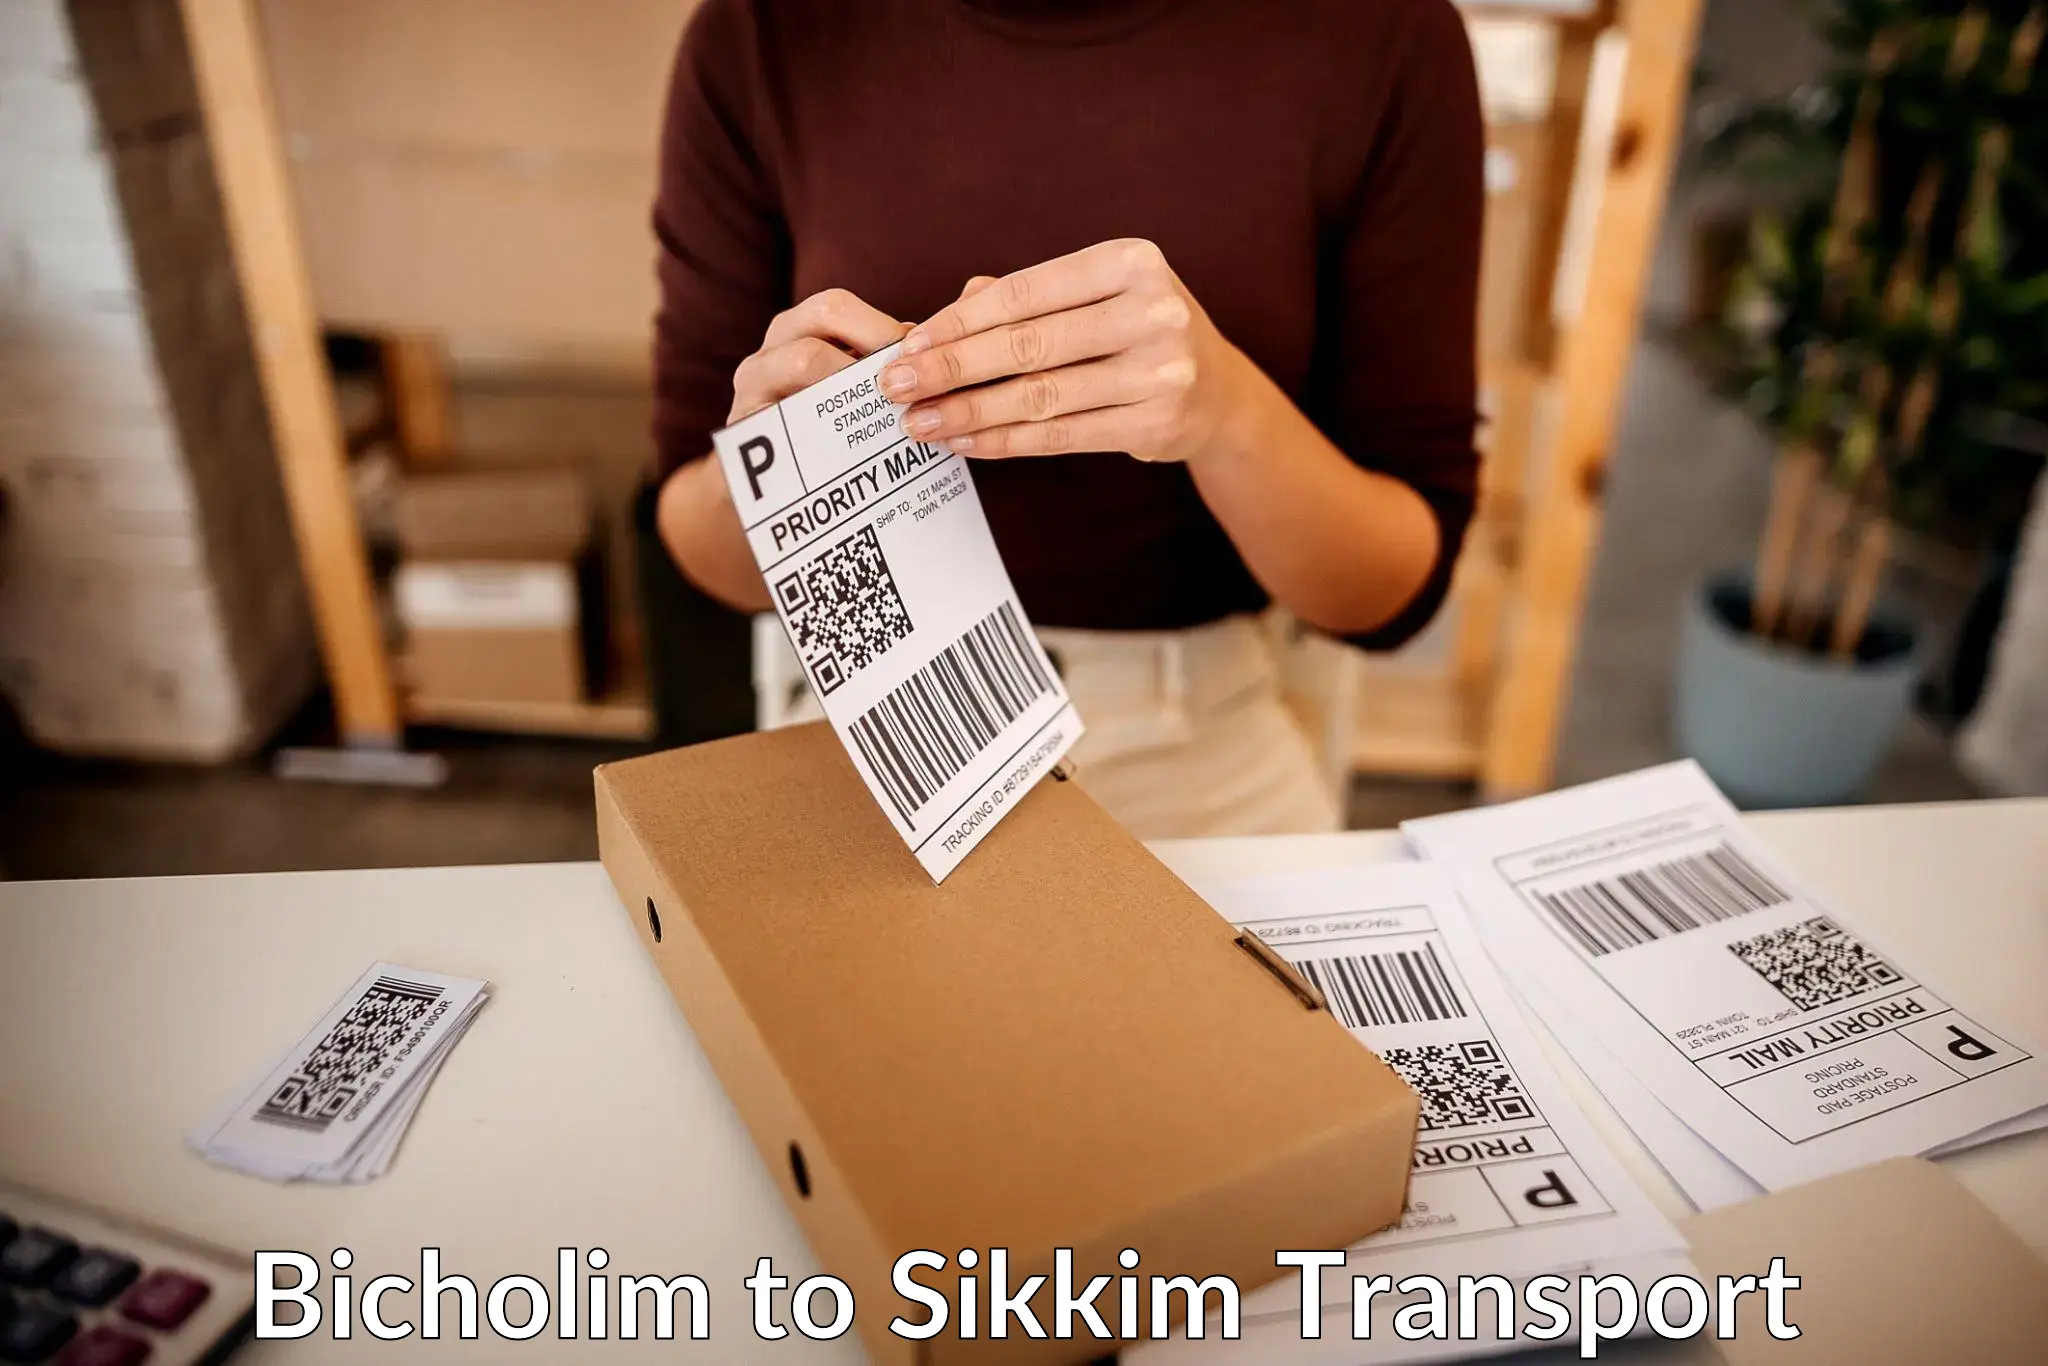 Furniture transport service Bicholim to Gangtok